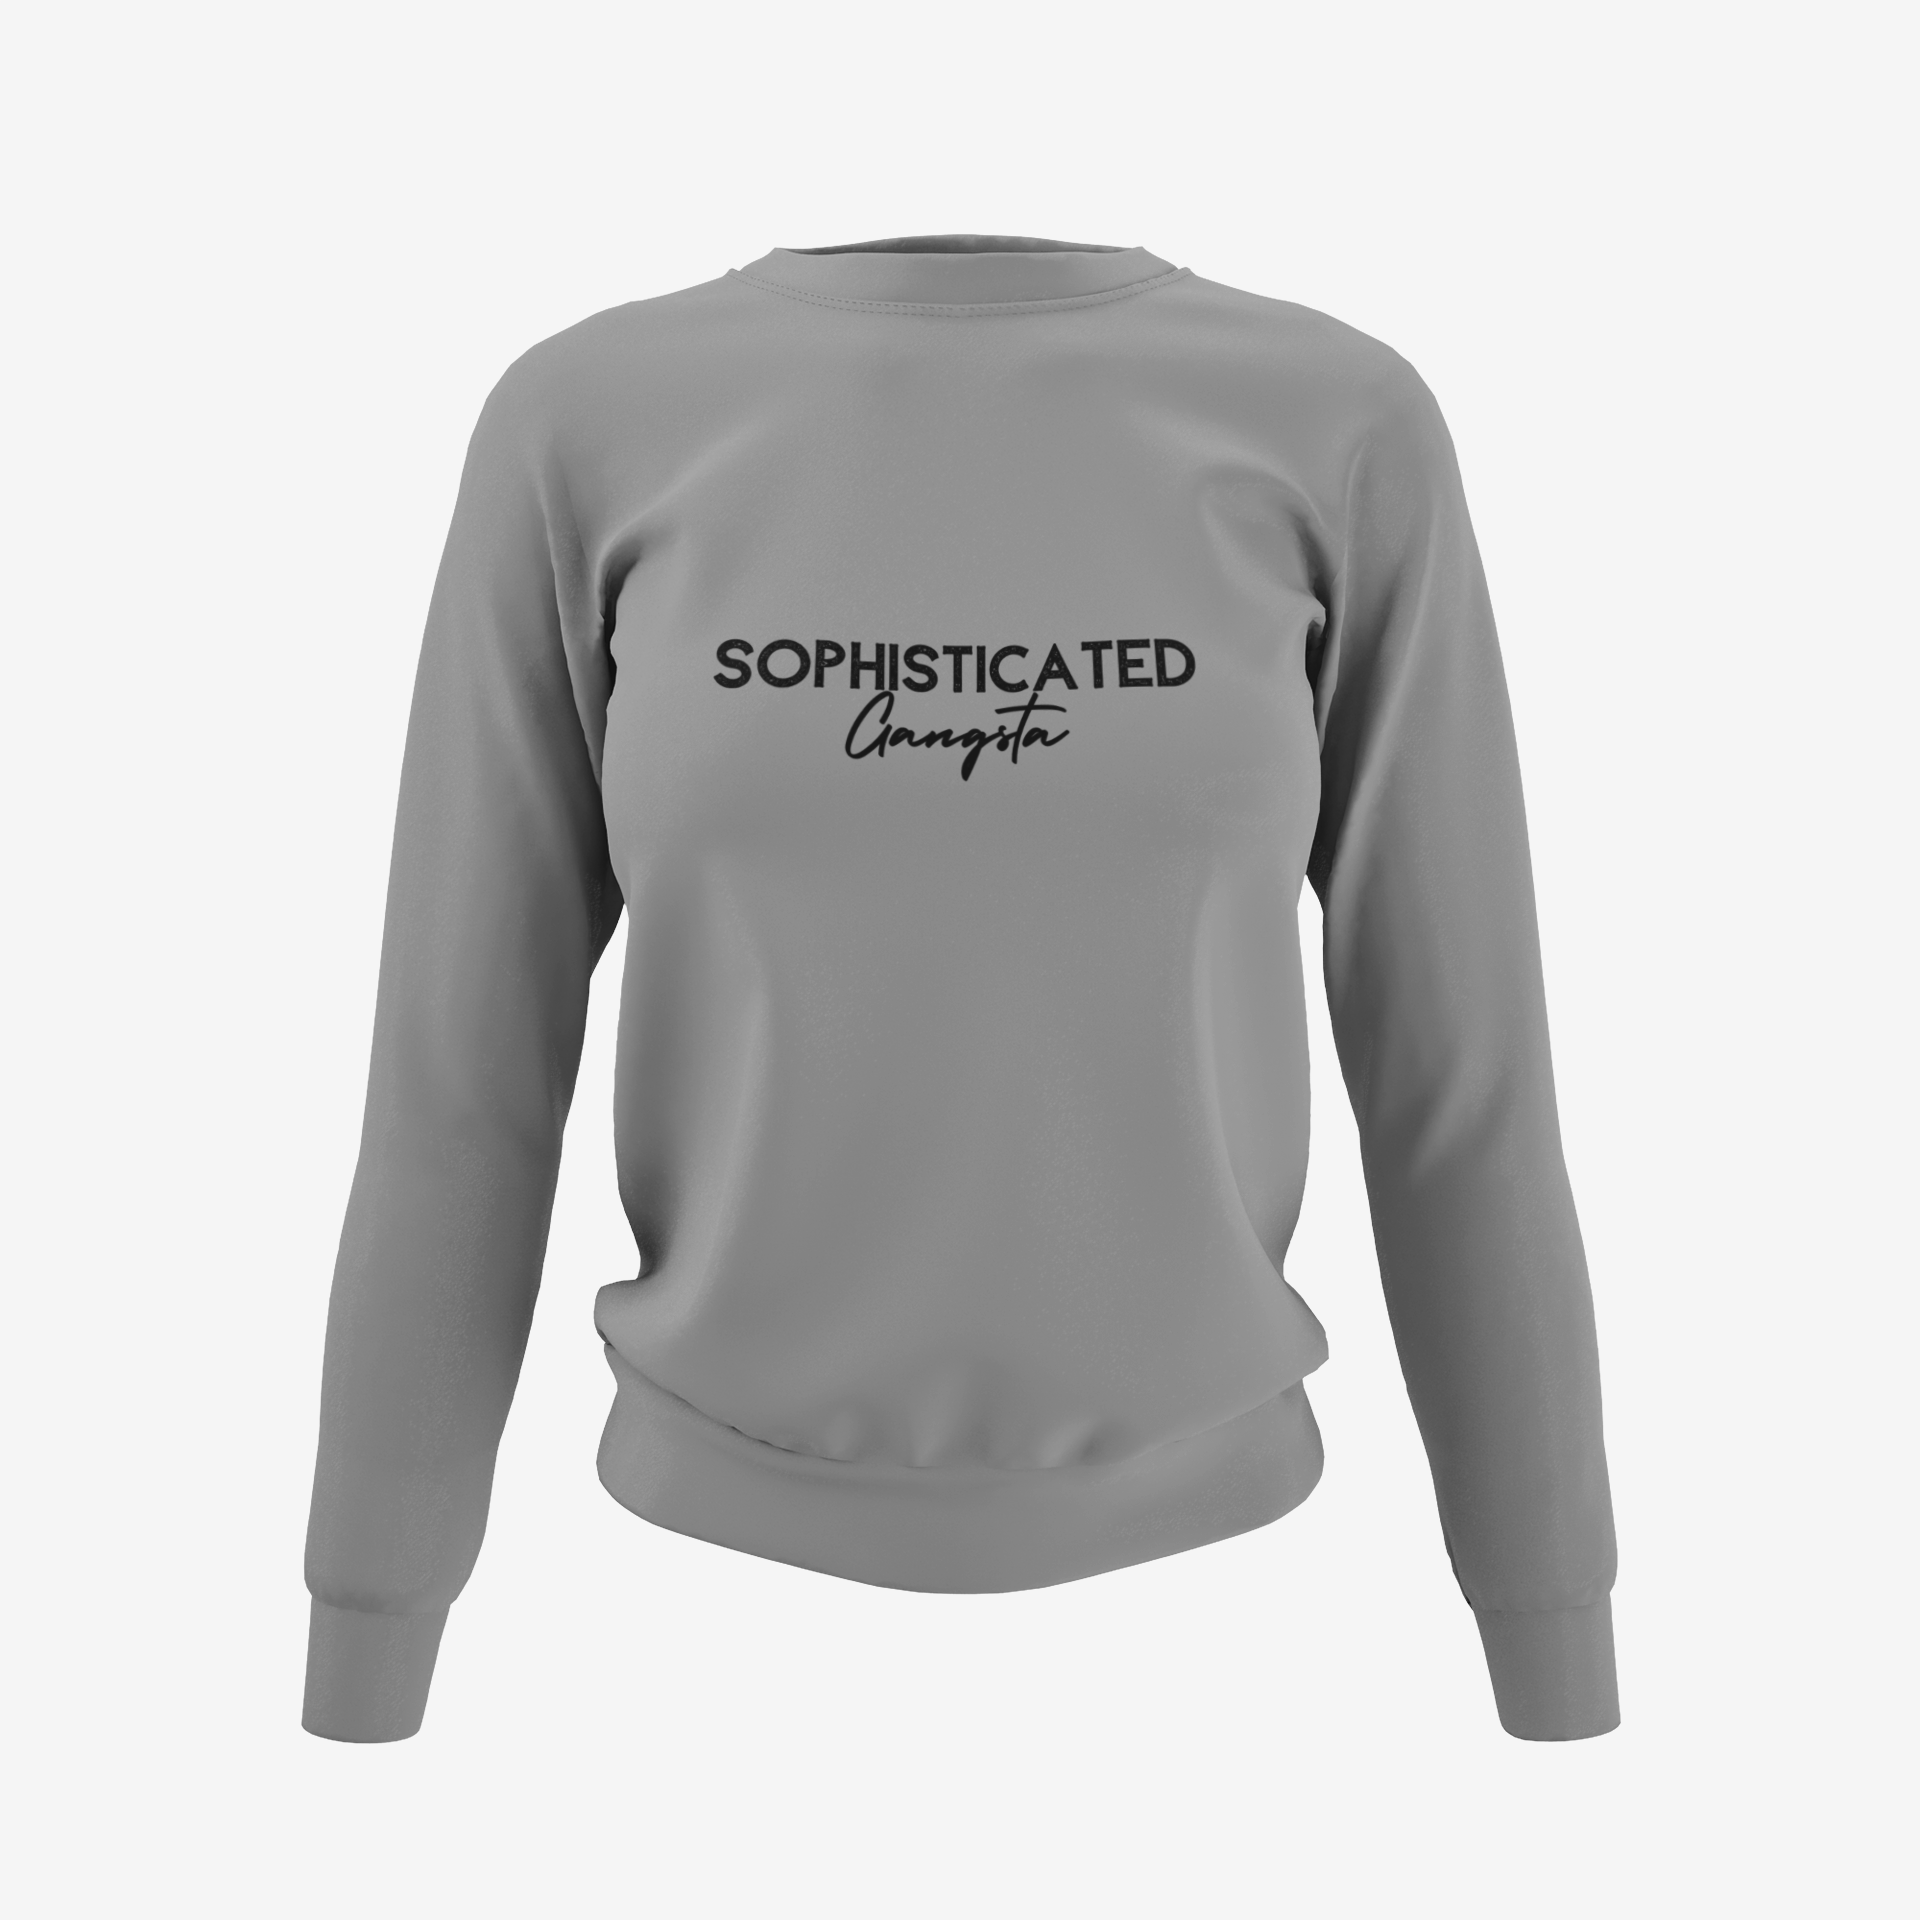 Sophisticated Gangsta Sweatshirt